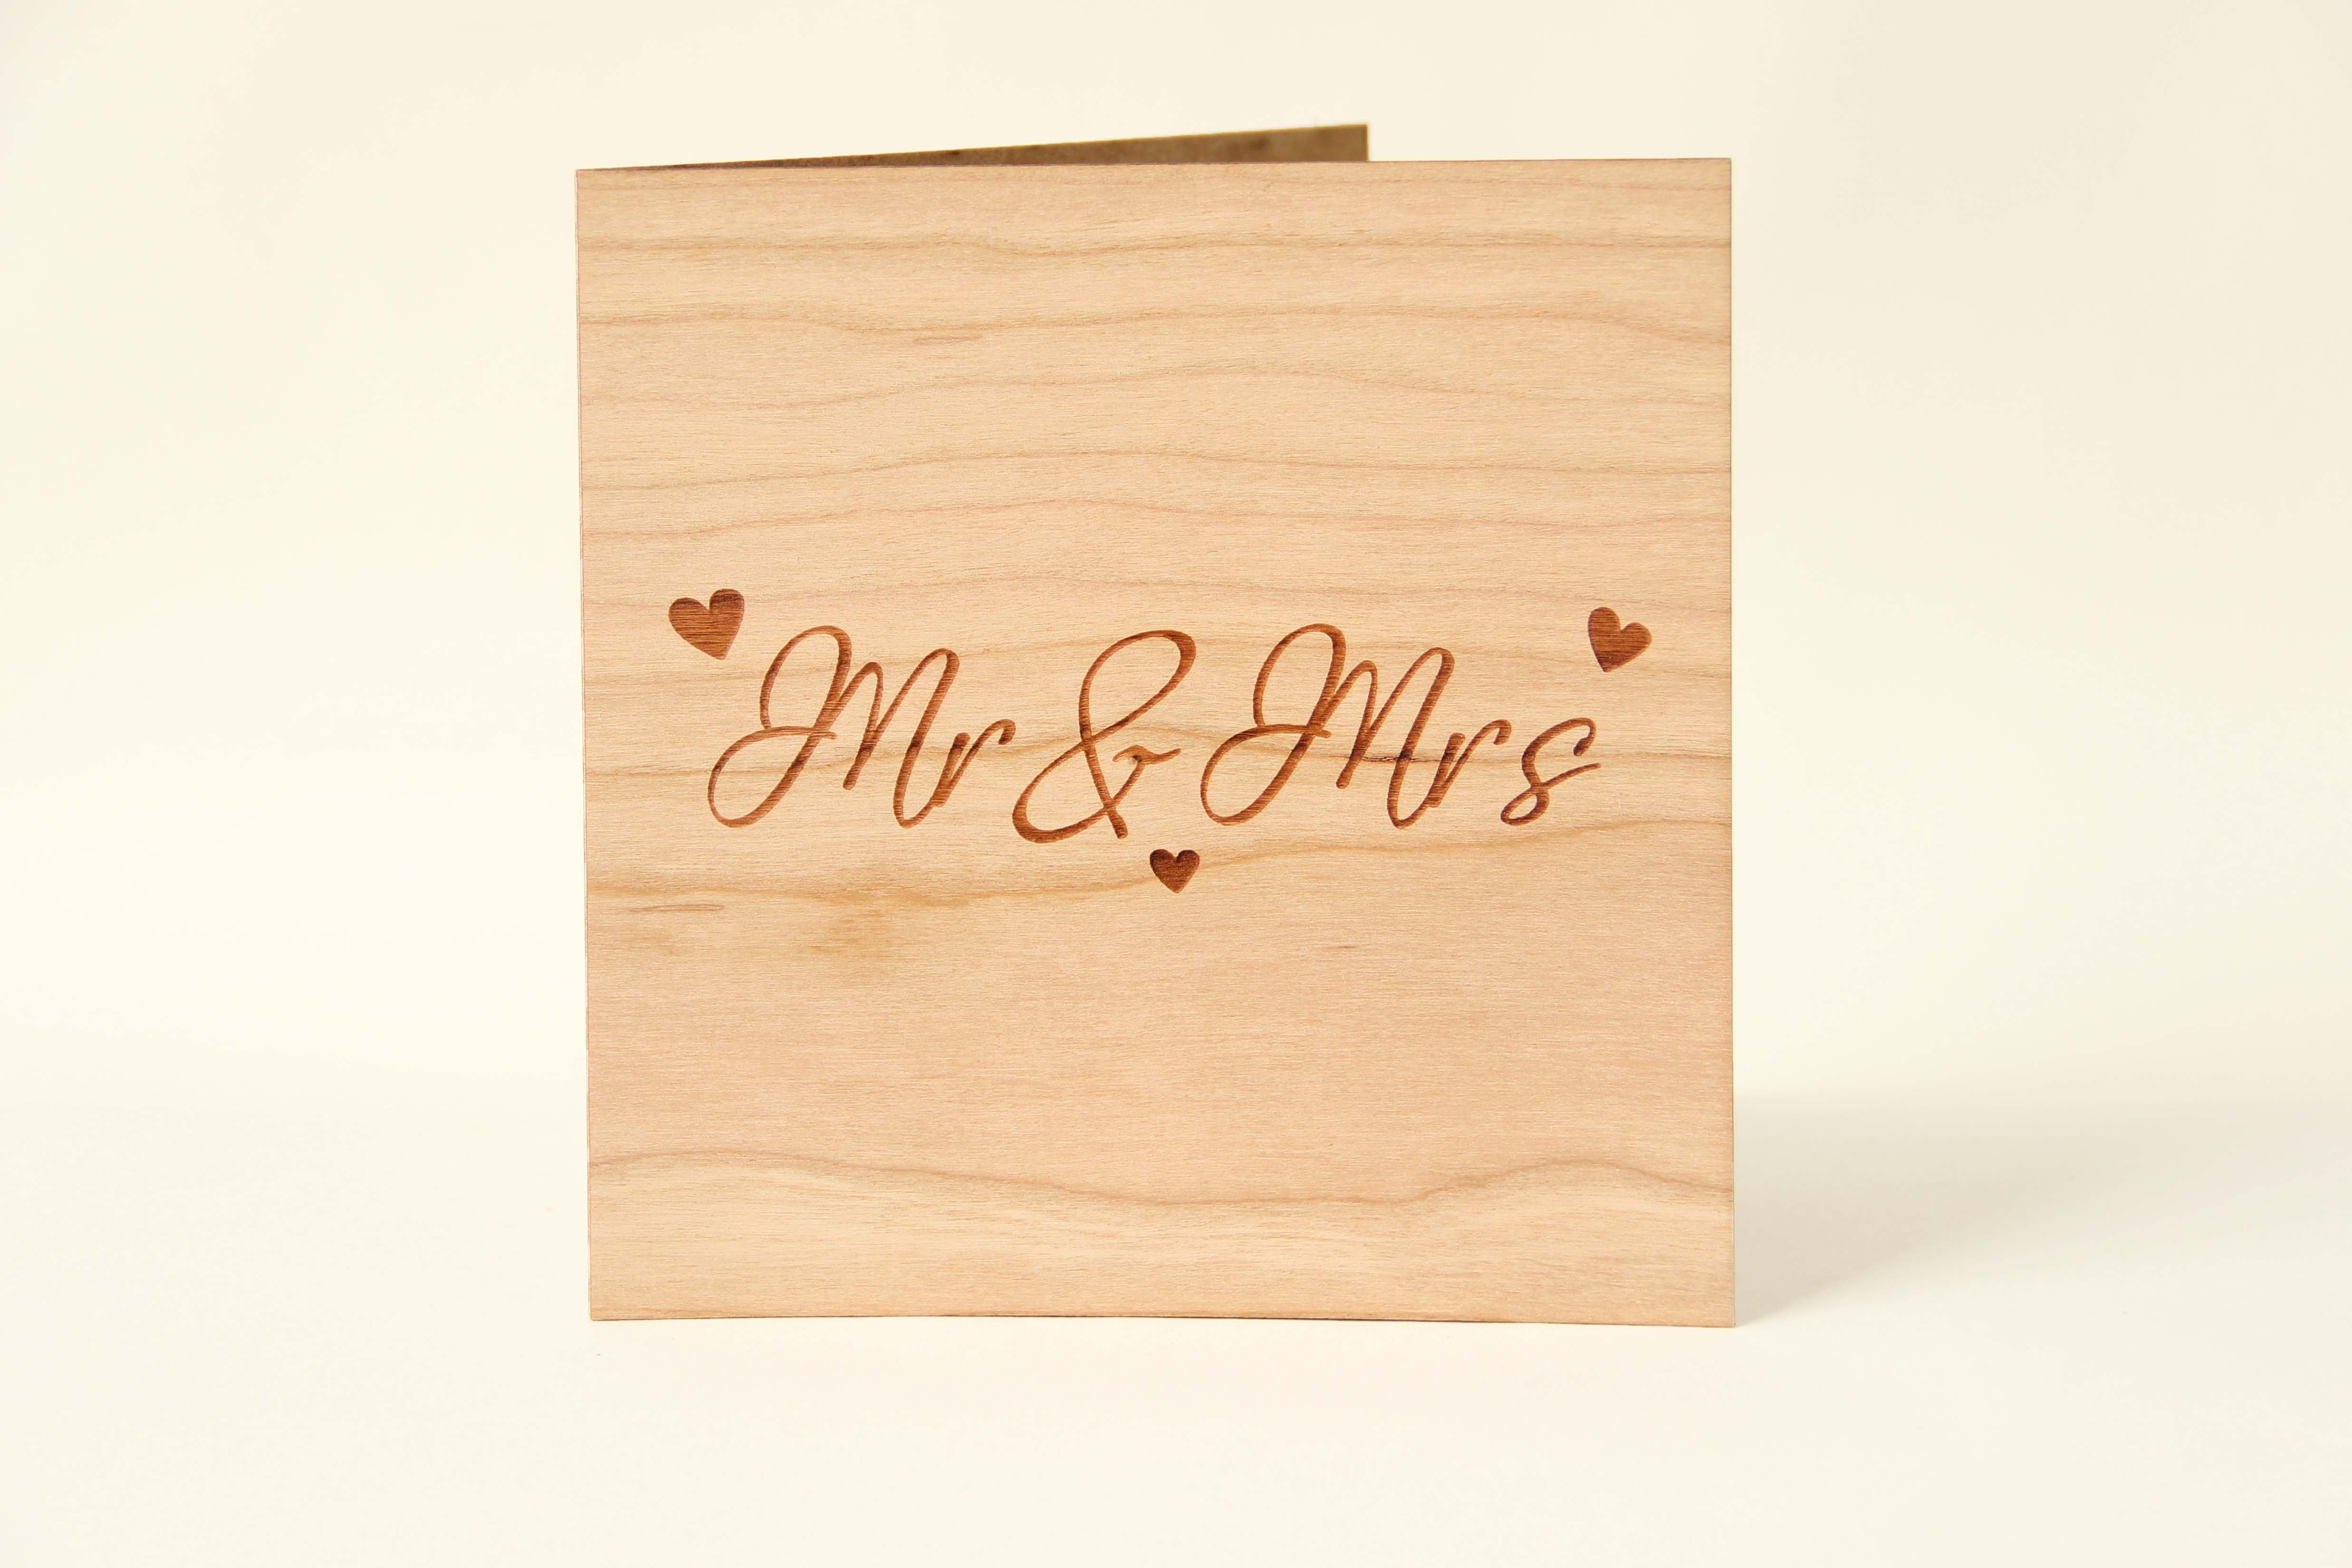 Holzgrusskarten - Holzgrusskarte Hochzeit "Mr & Mrs", Kirsche